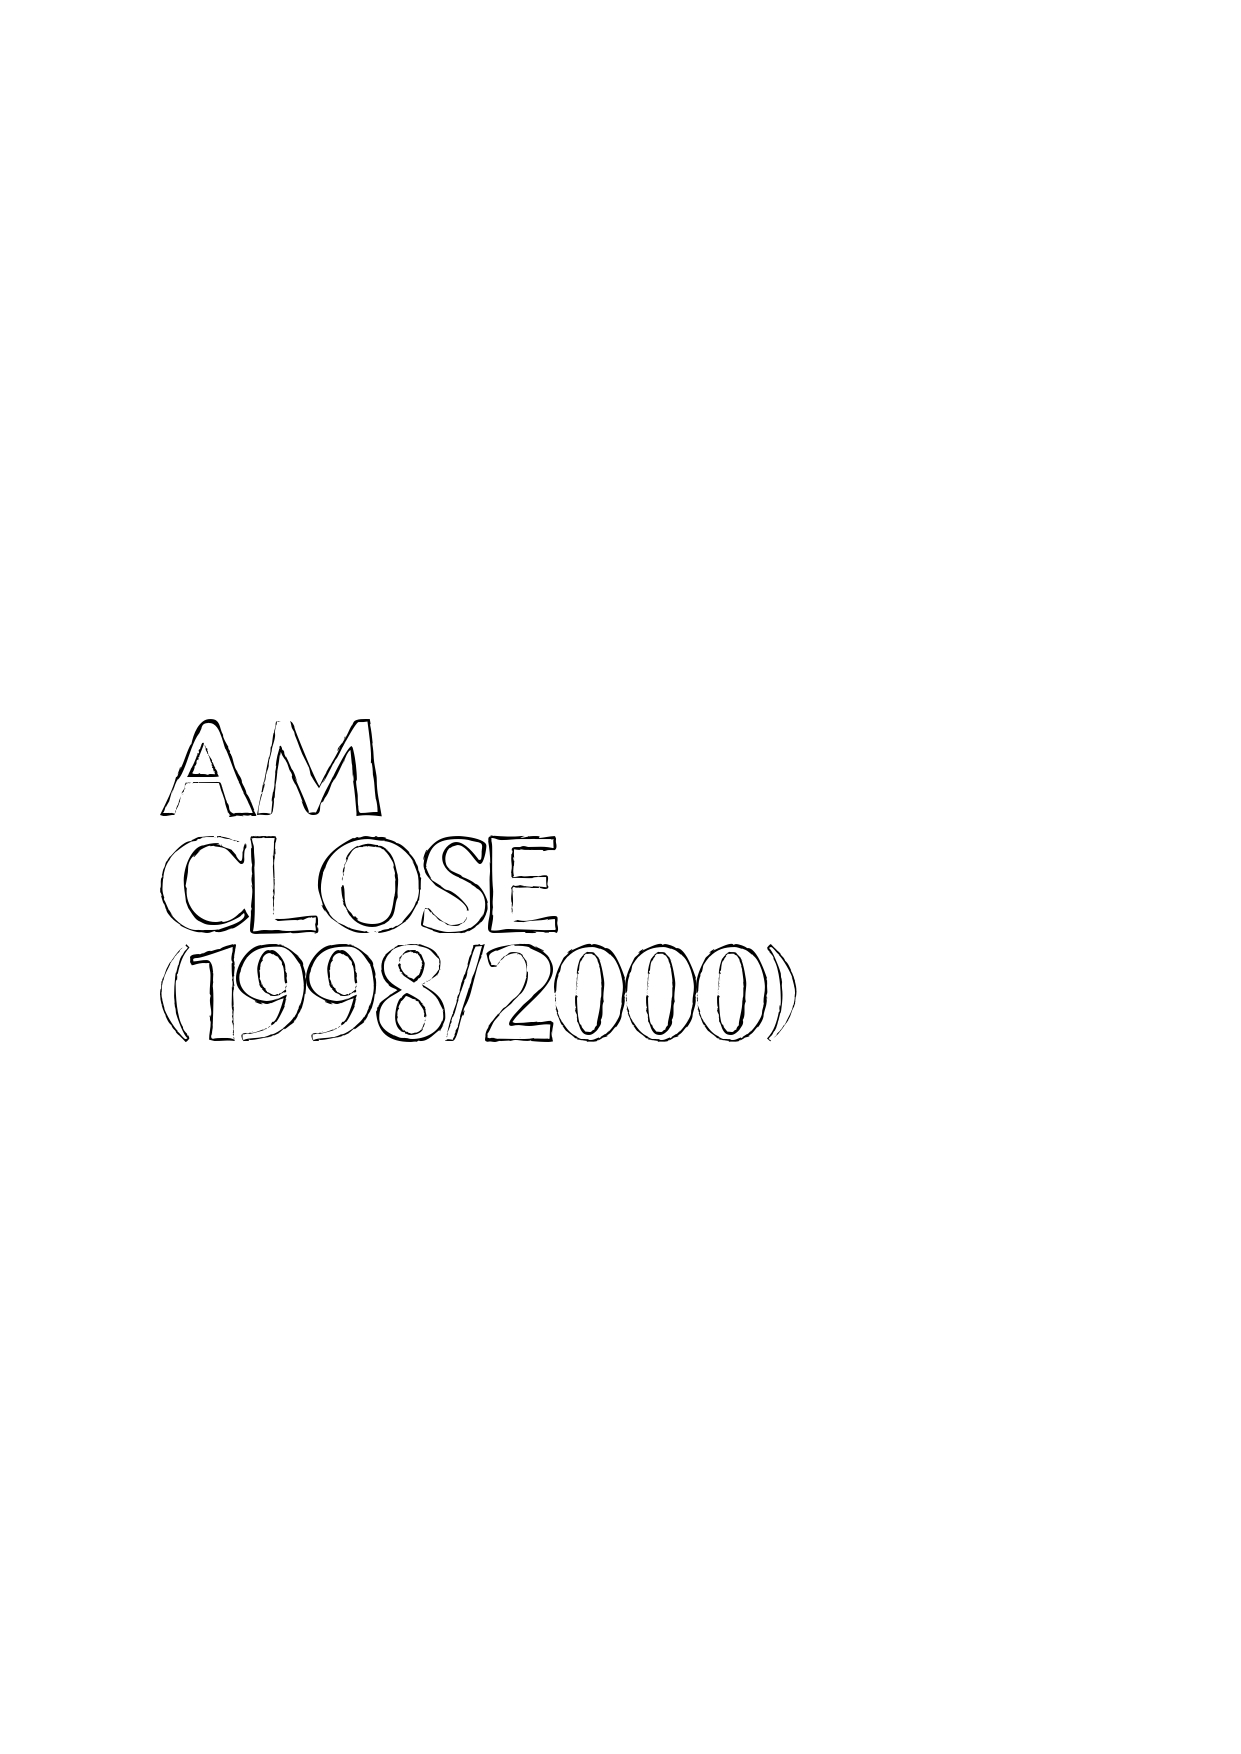 AM(close)1998/2000